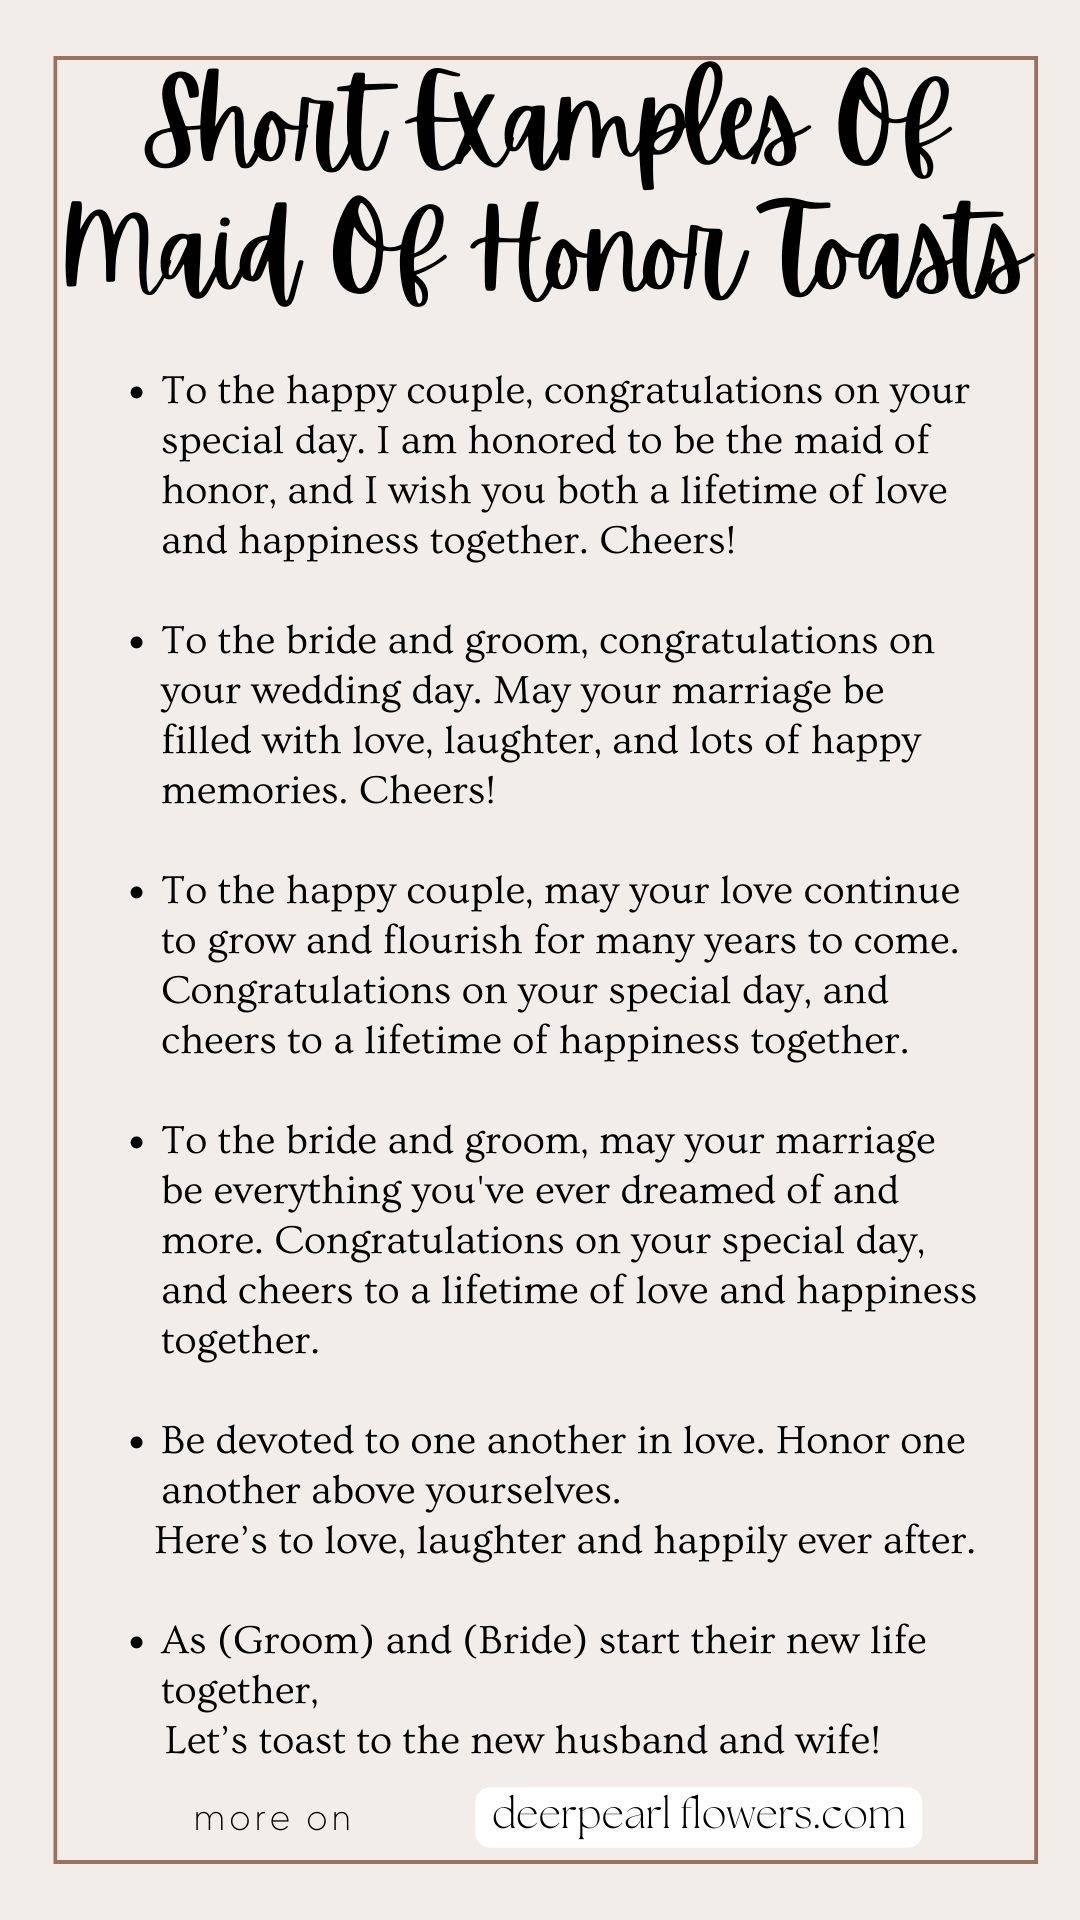 how to write a wedding speech maid of honour